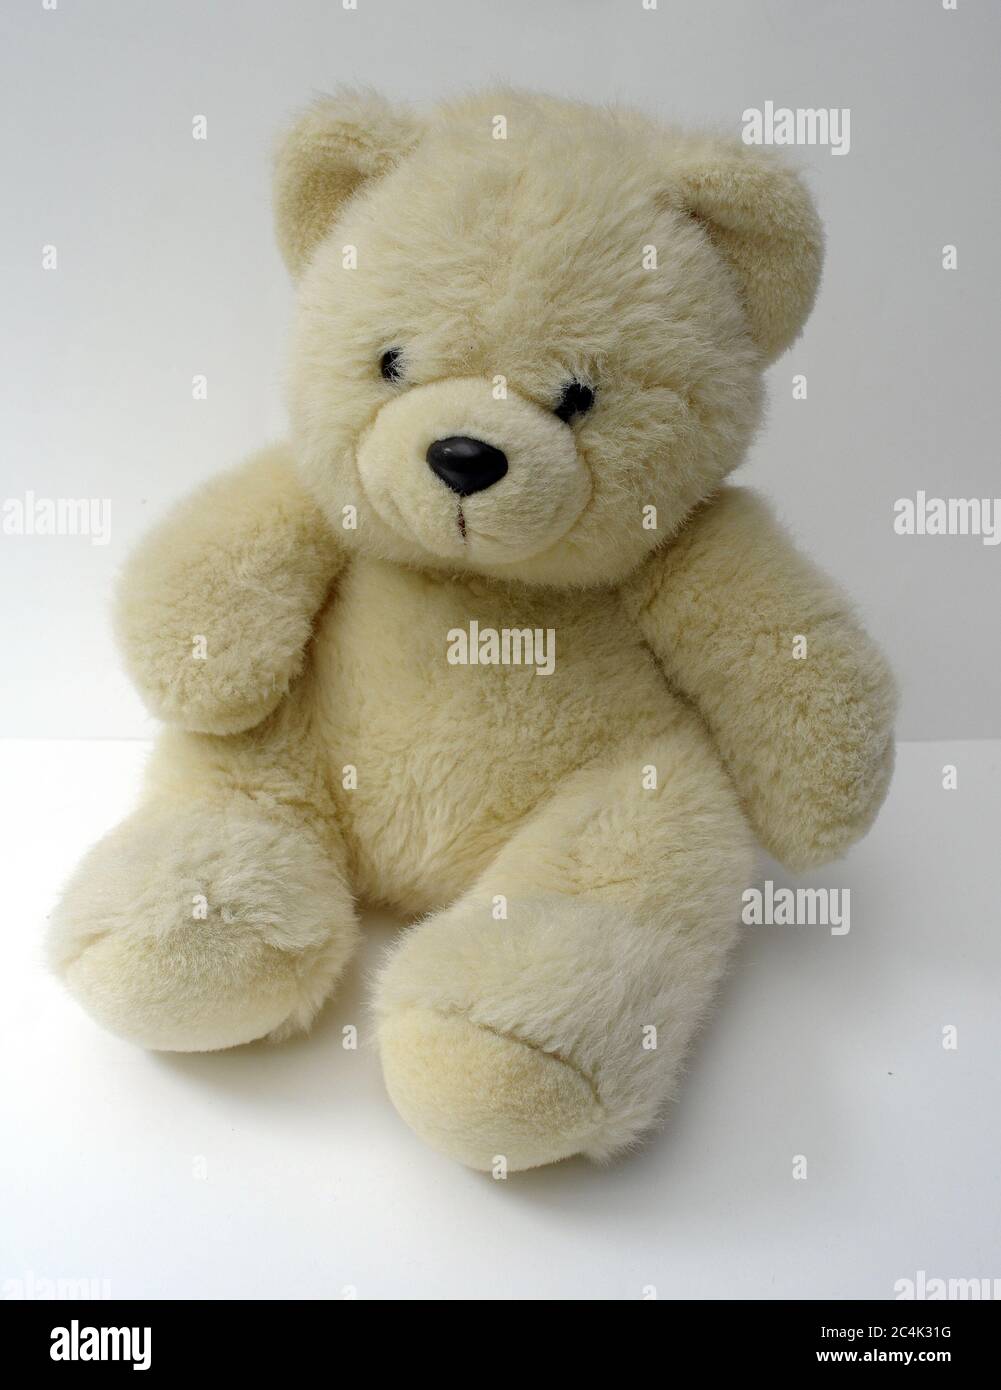 teddy bear toy, Stock Photo